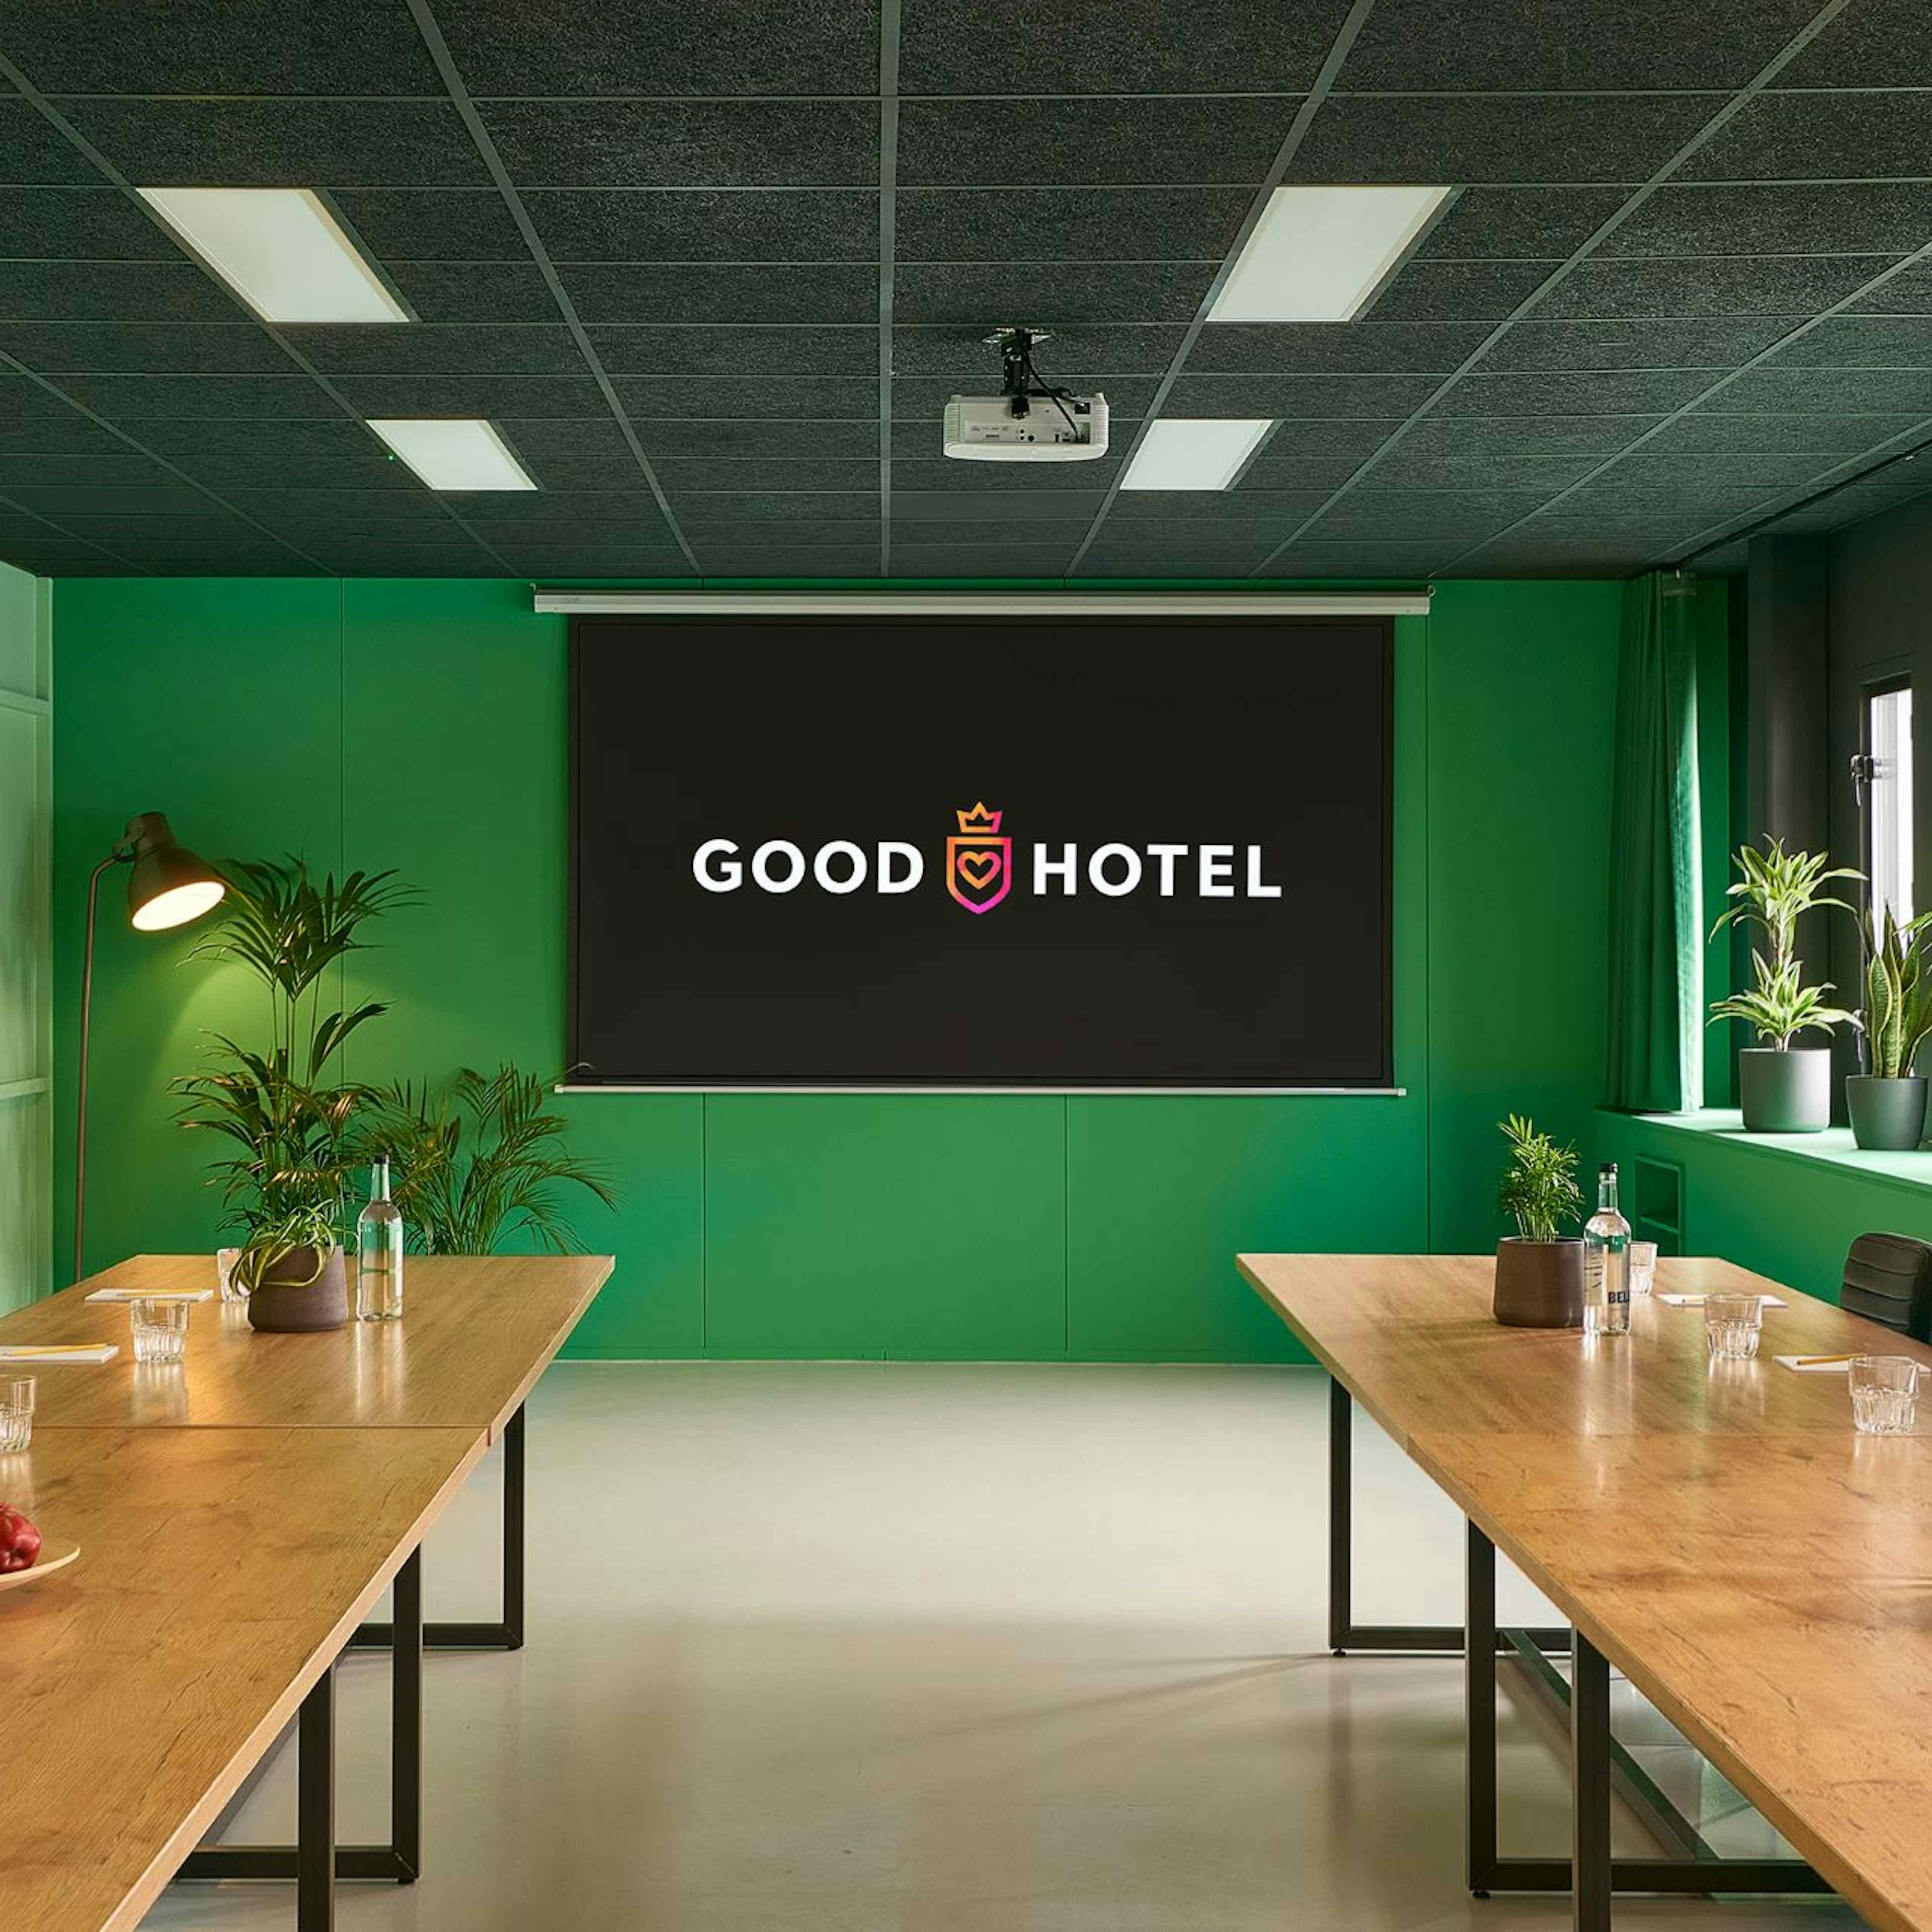 Good Hotel London  - Green meeting room image 1